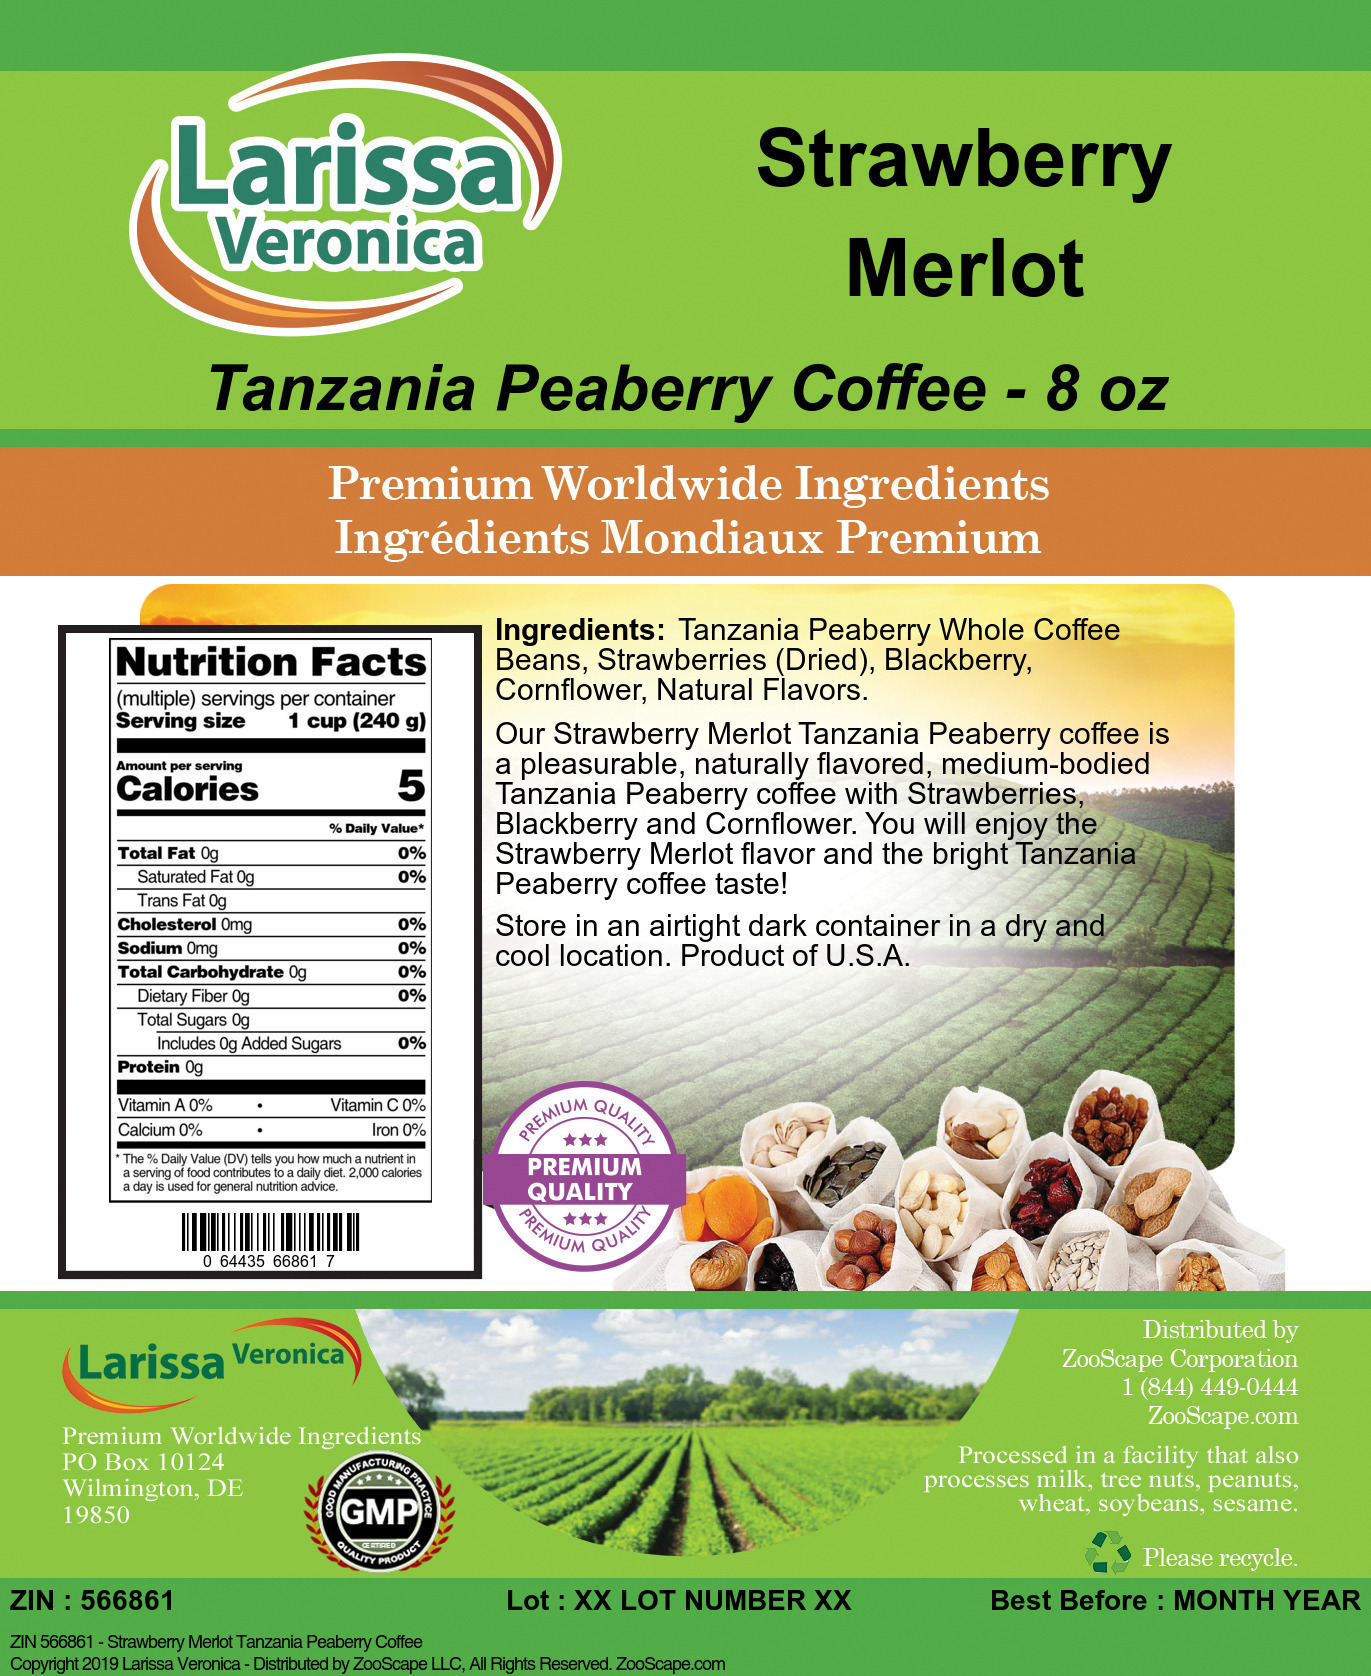 Strawberry Merlot Tanzania Peaberry Coffee - Label